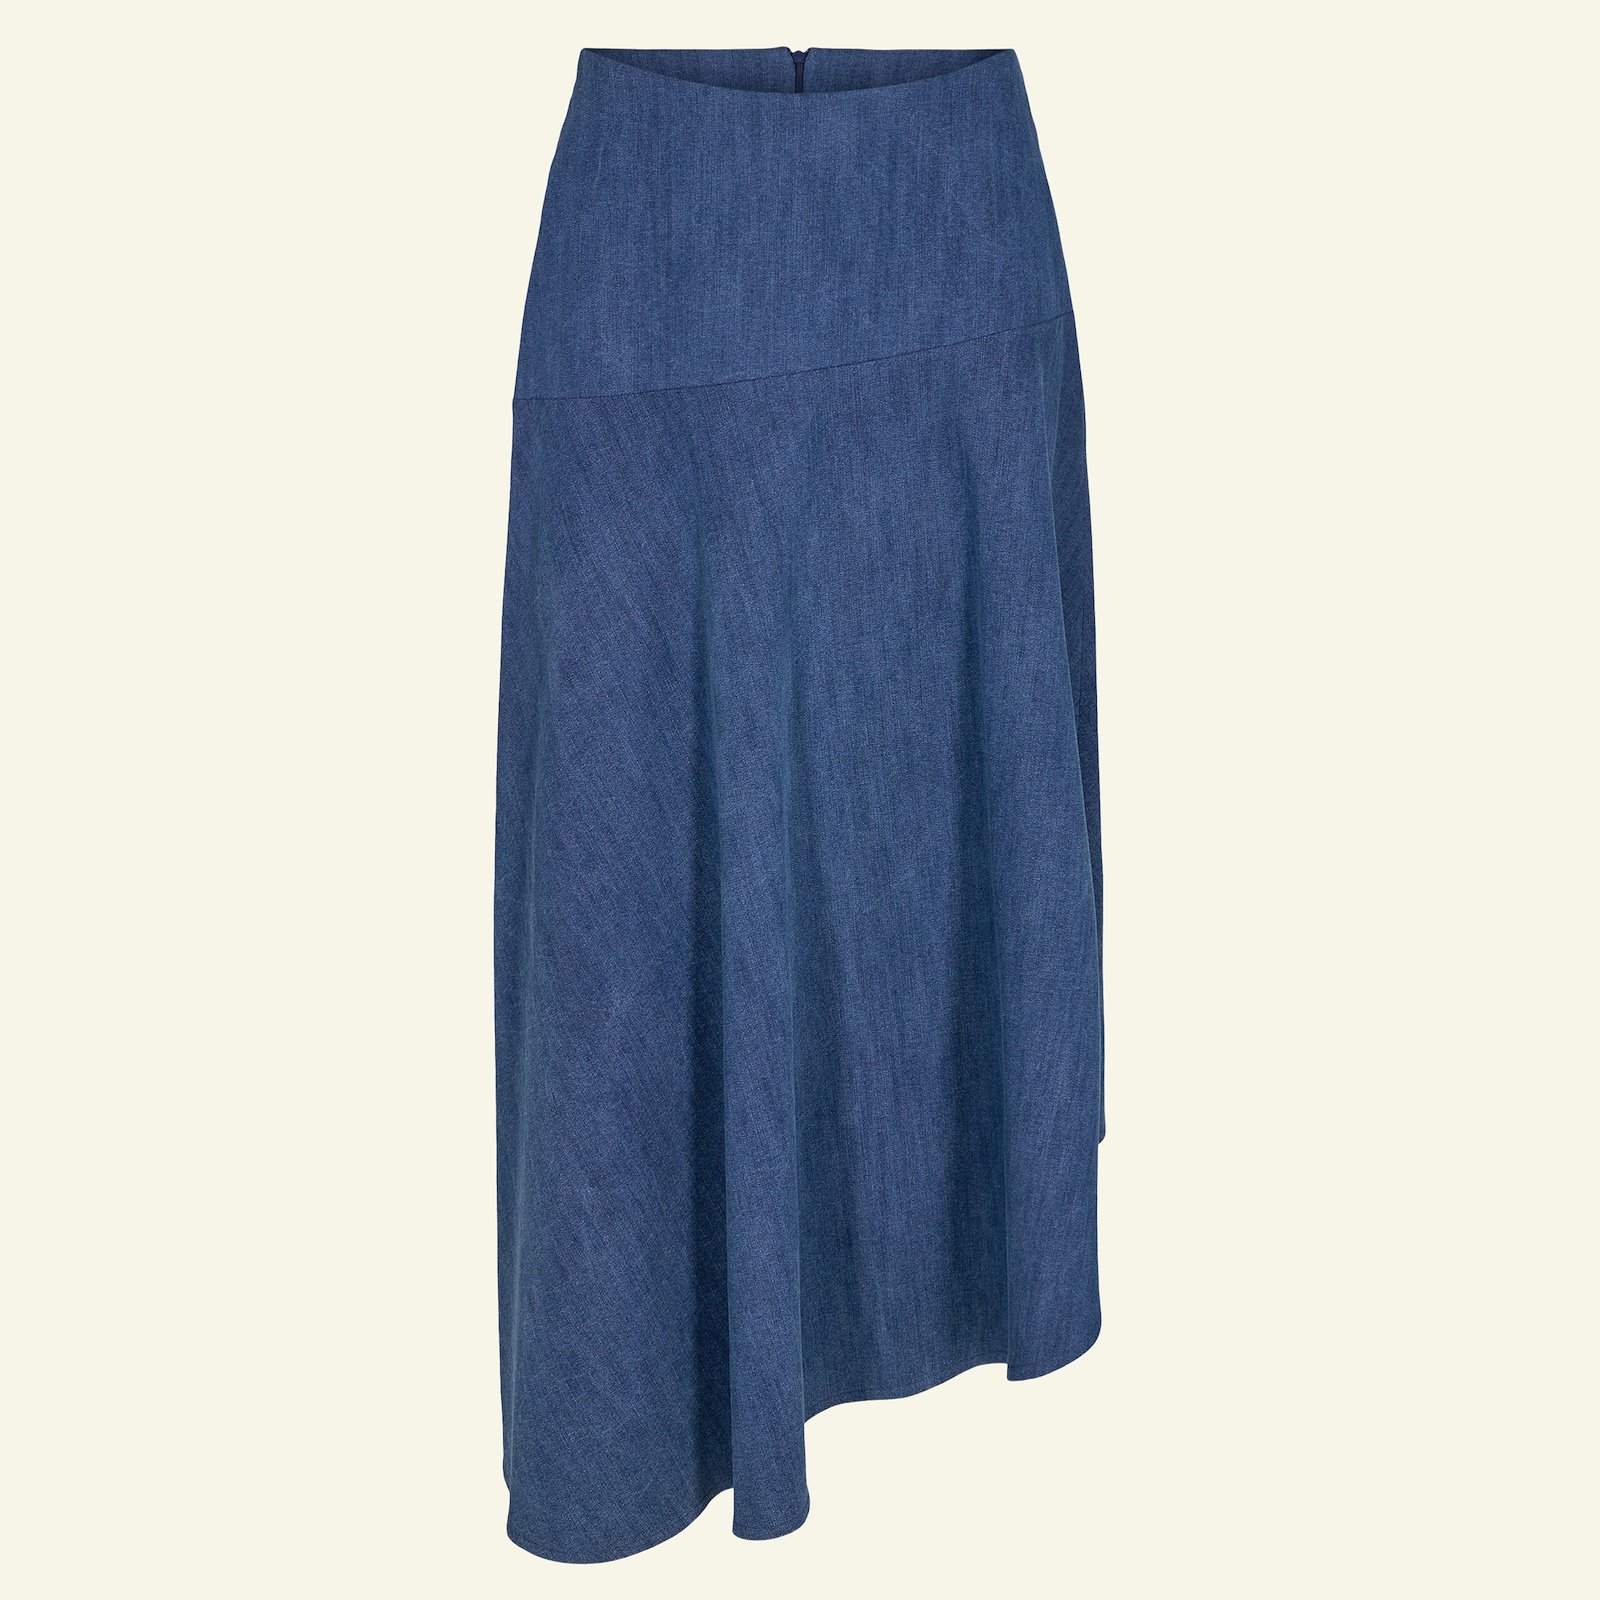 Asymmetric skirt, 36/8 p21041_460851_sskit